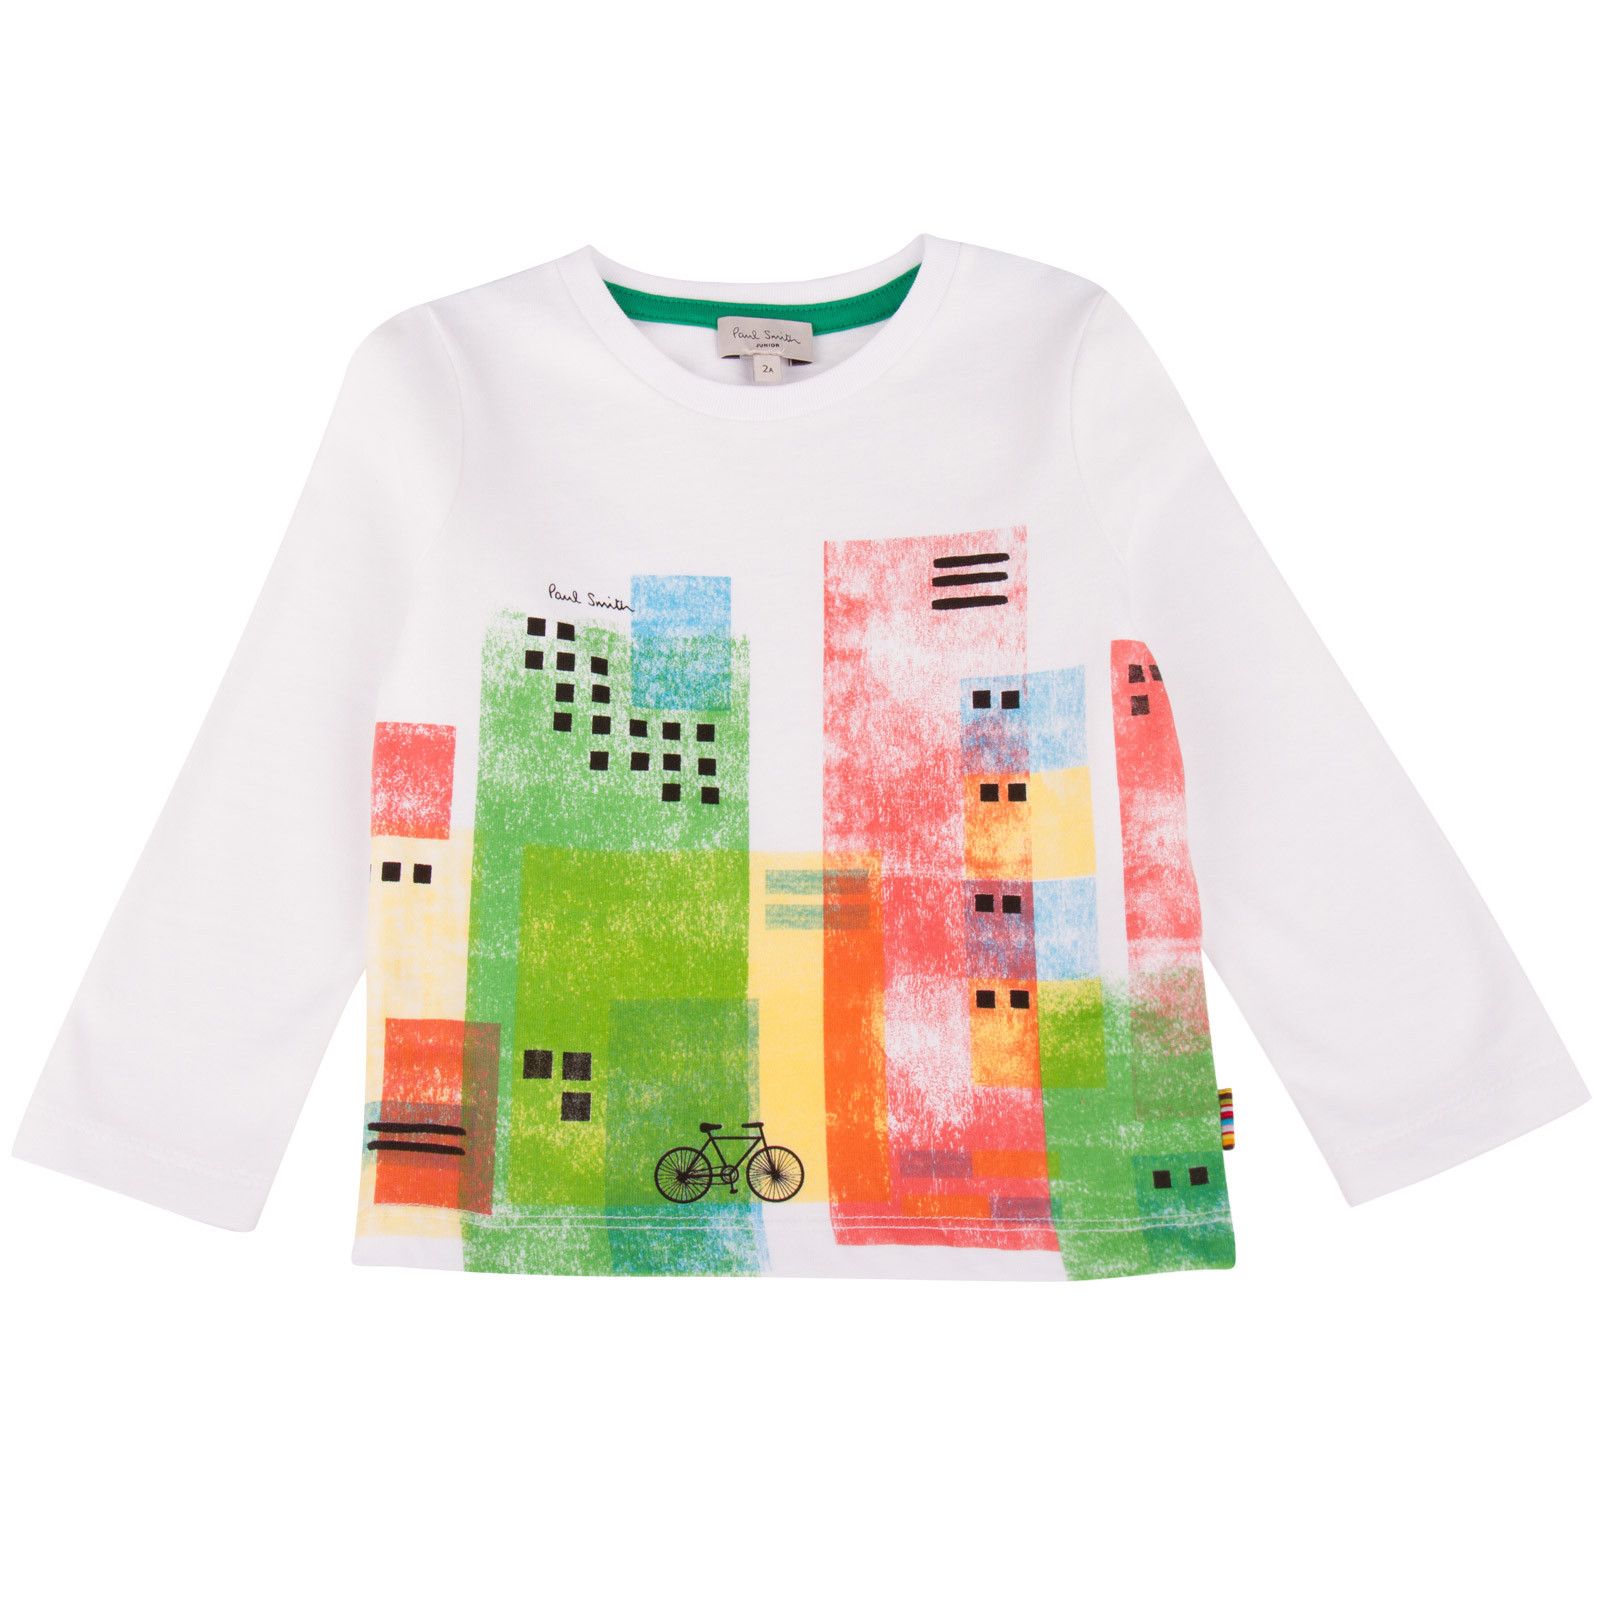 Boys White Cityscape Printed T-Shirt - CÉMAROSE | Children's Fashion Store - 1